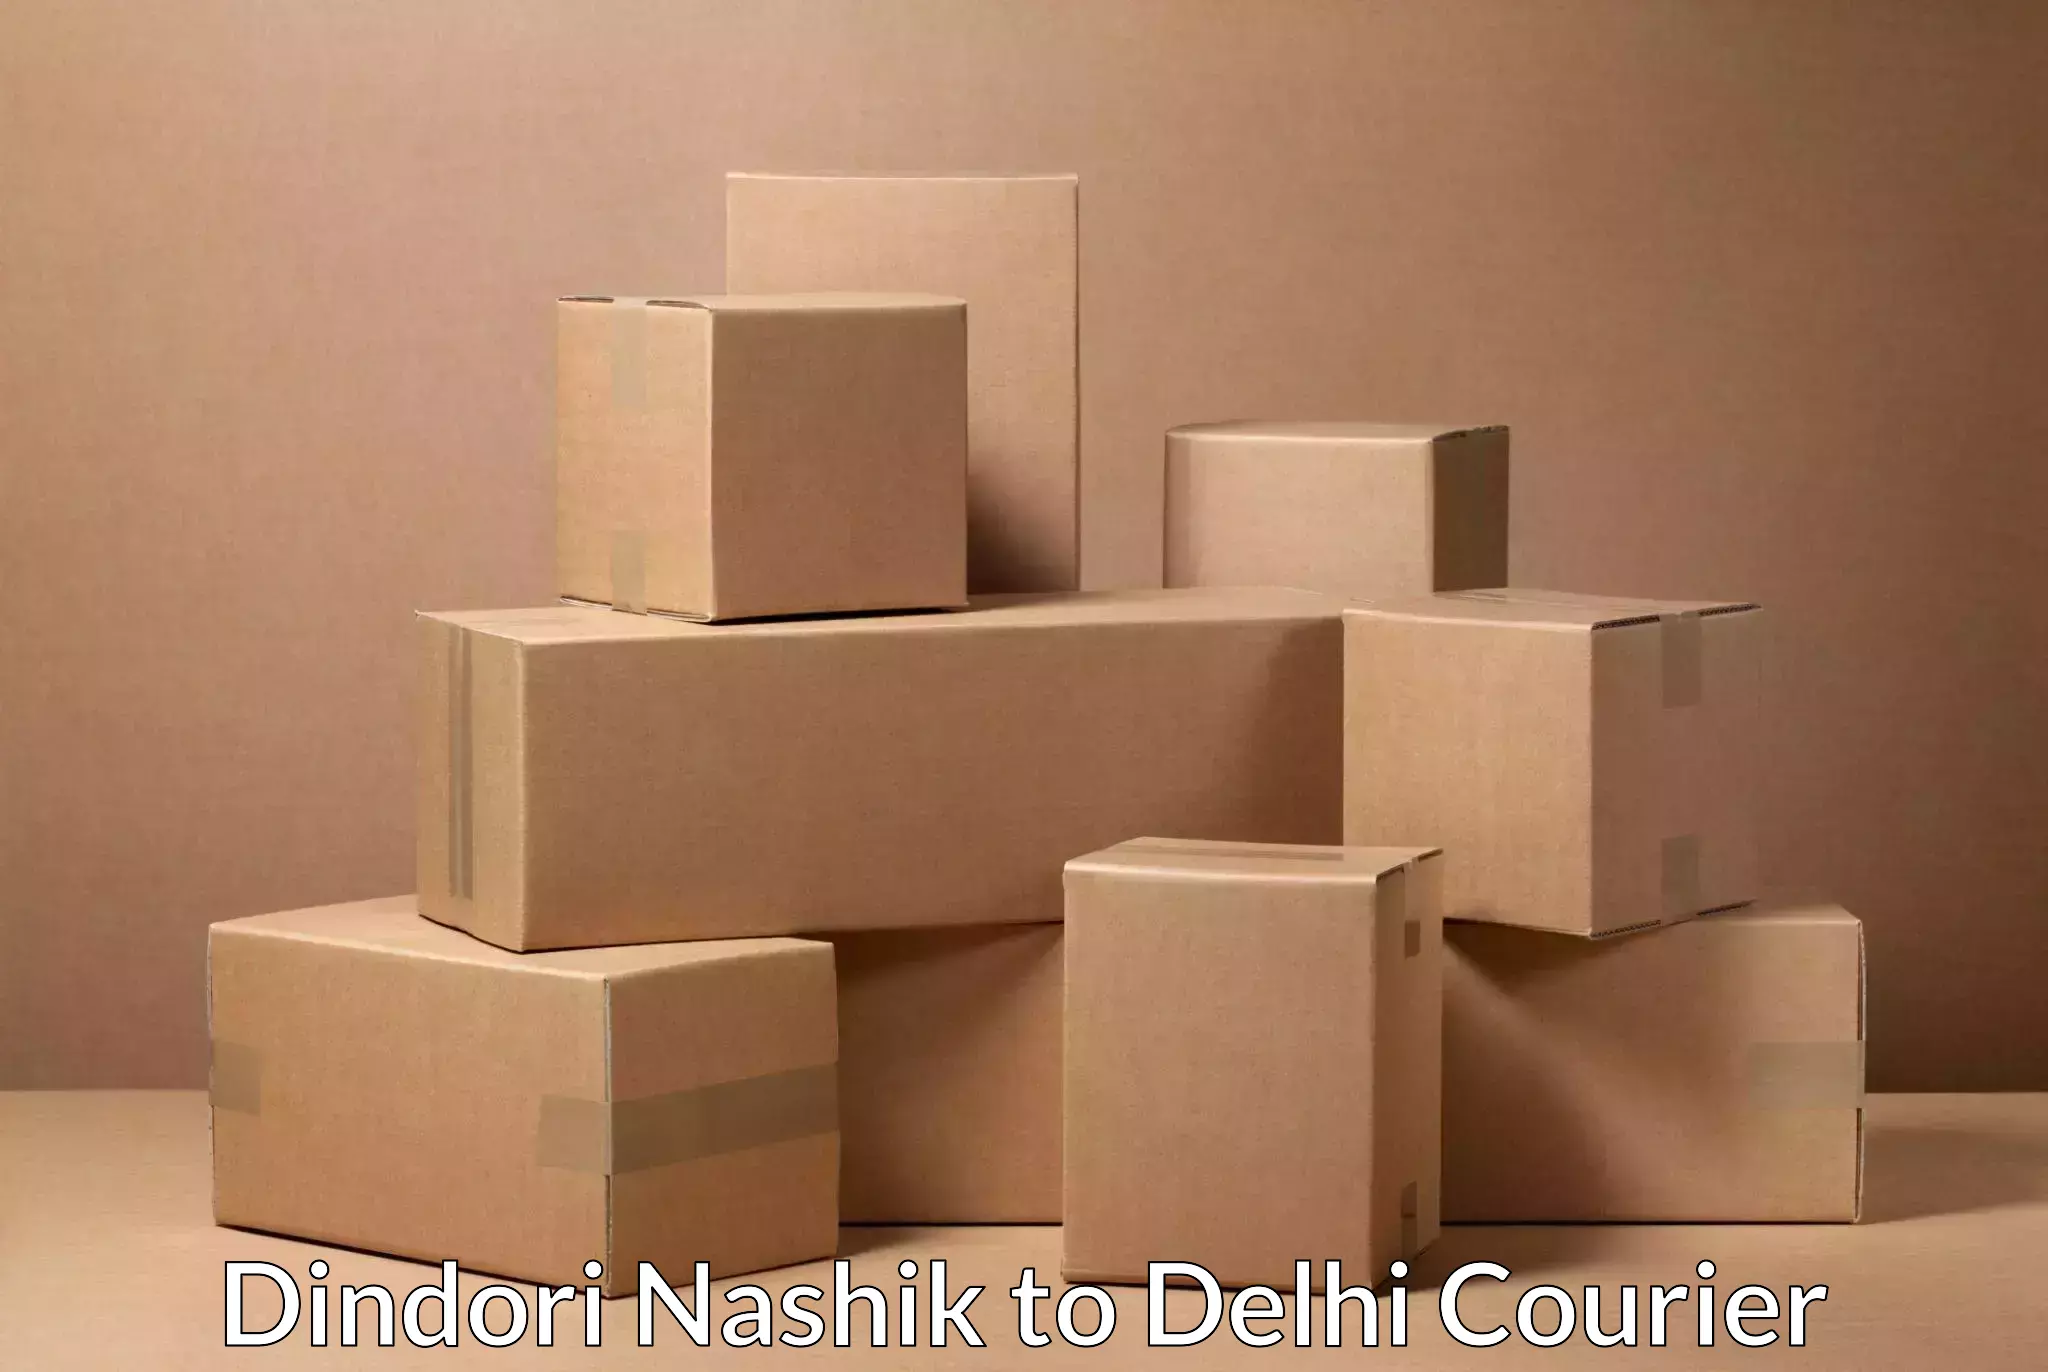 Nationwide delivery network Dindori Nashik to Delhi